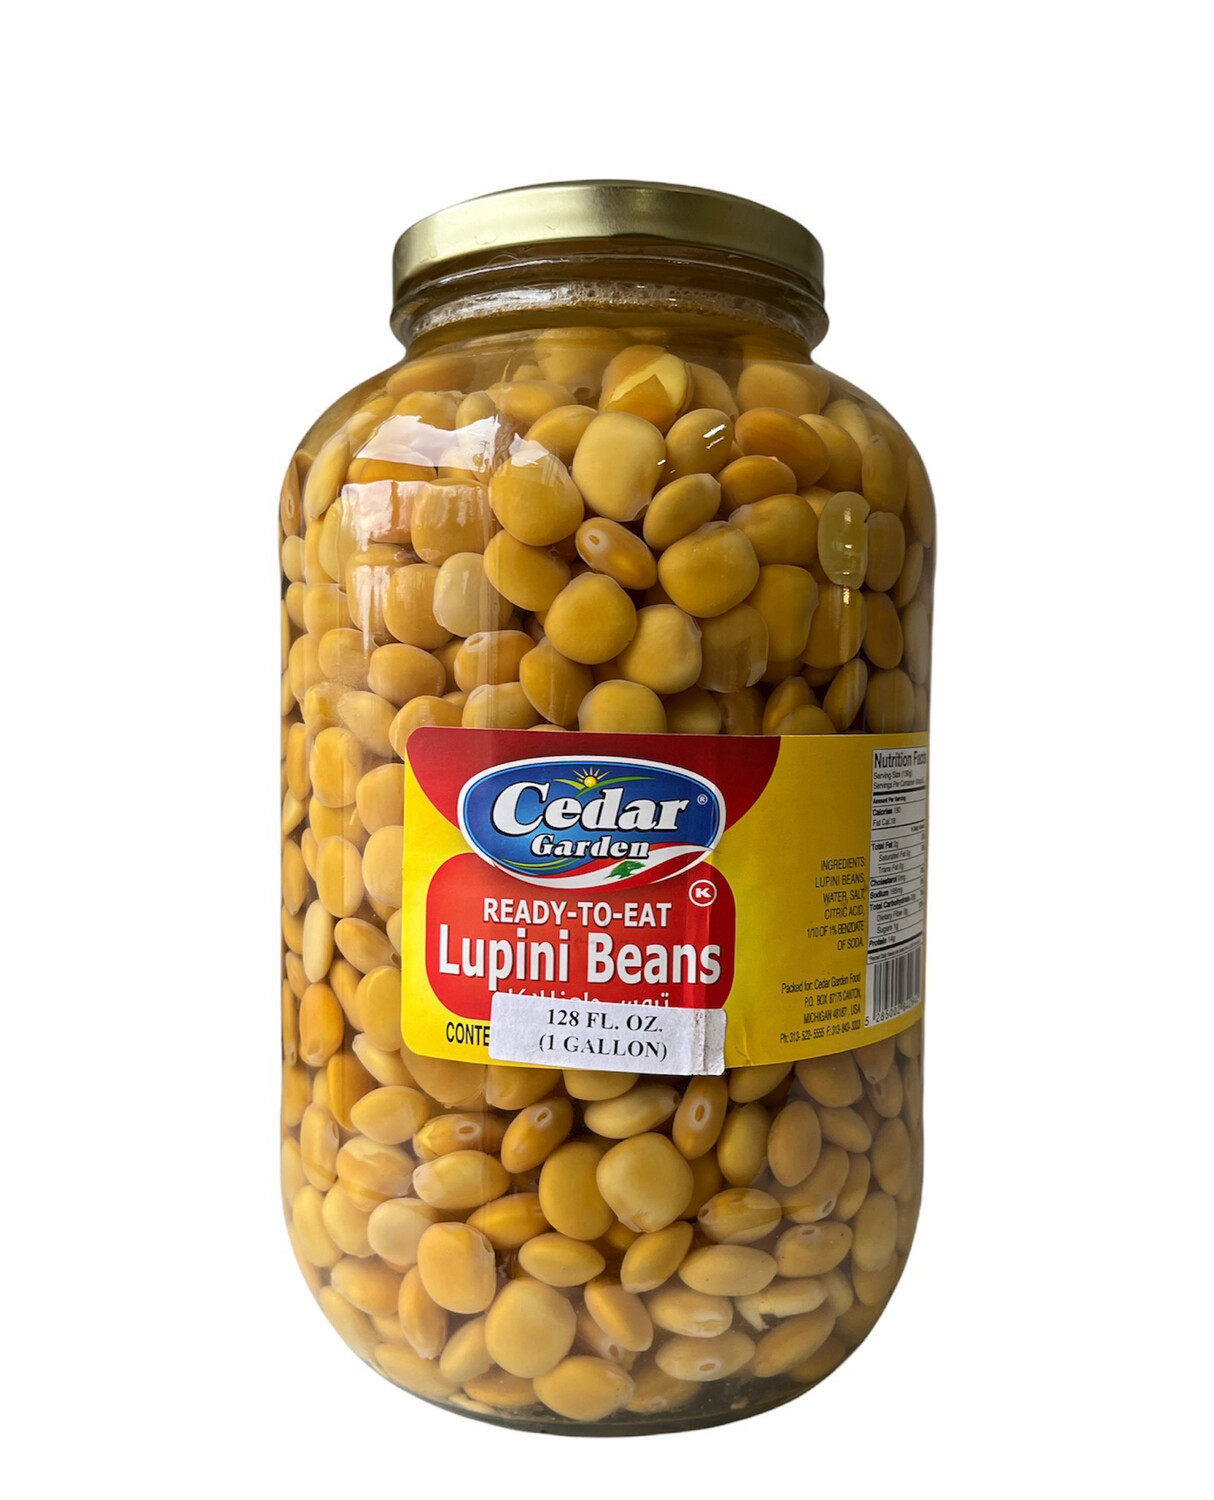 Cedar Garden “Ready-To-Eat” Lupini Beans 4x1G